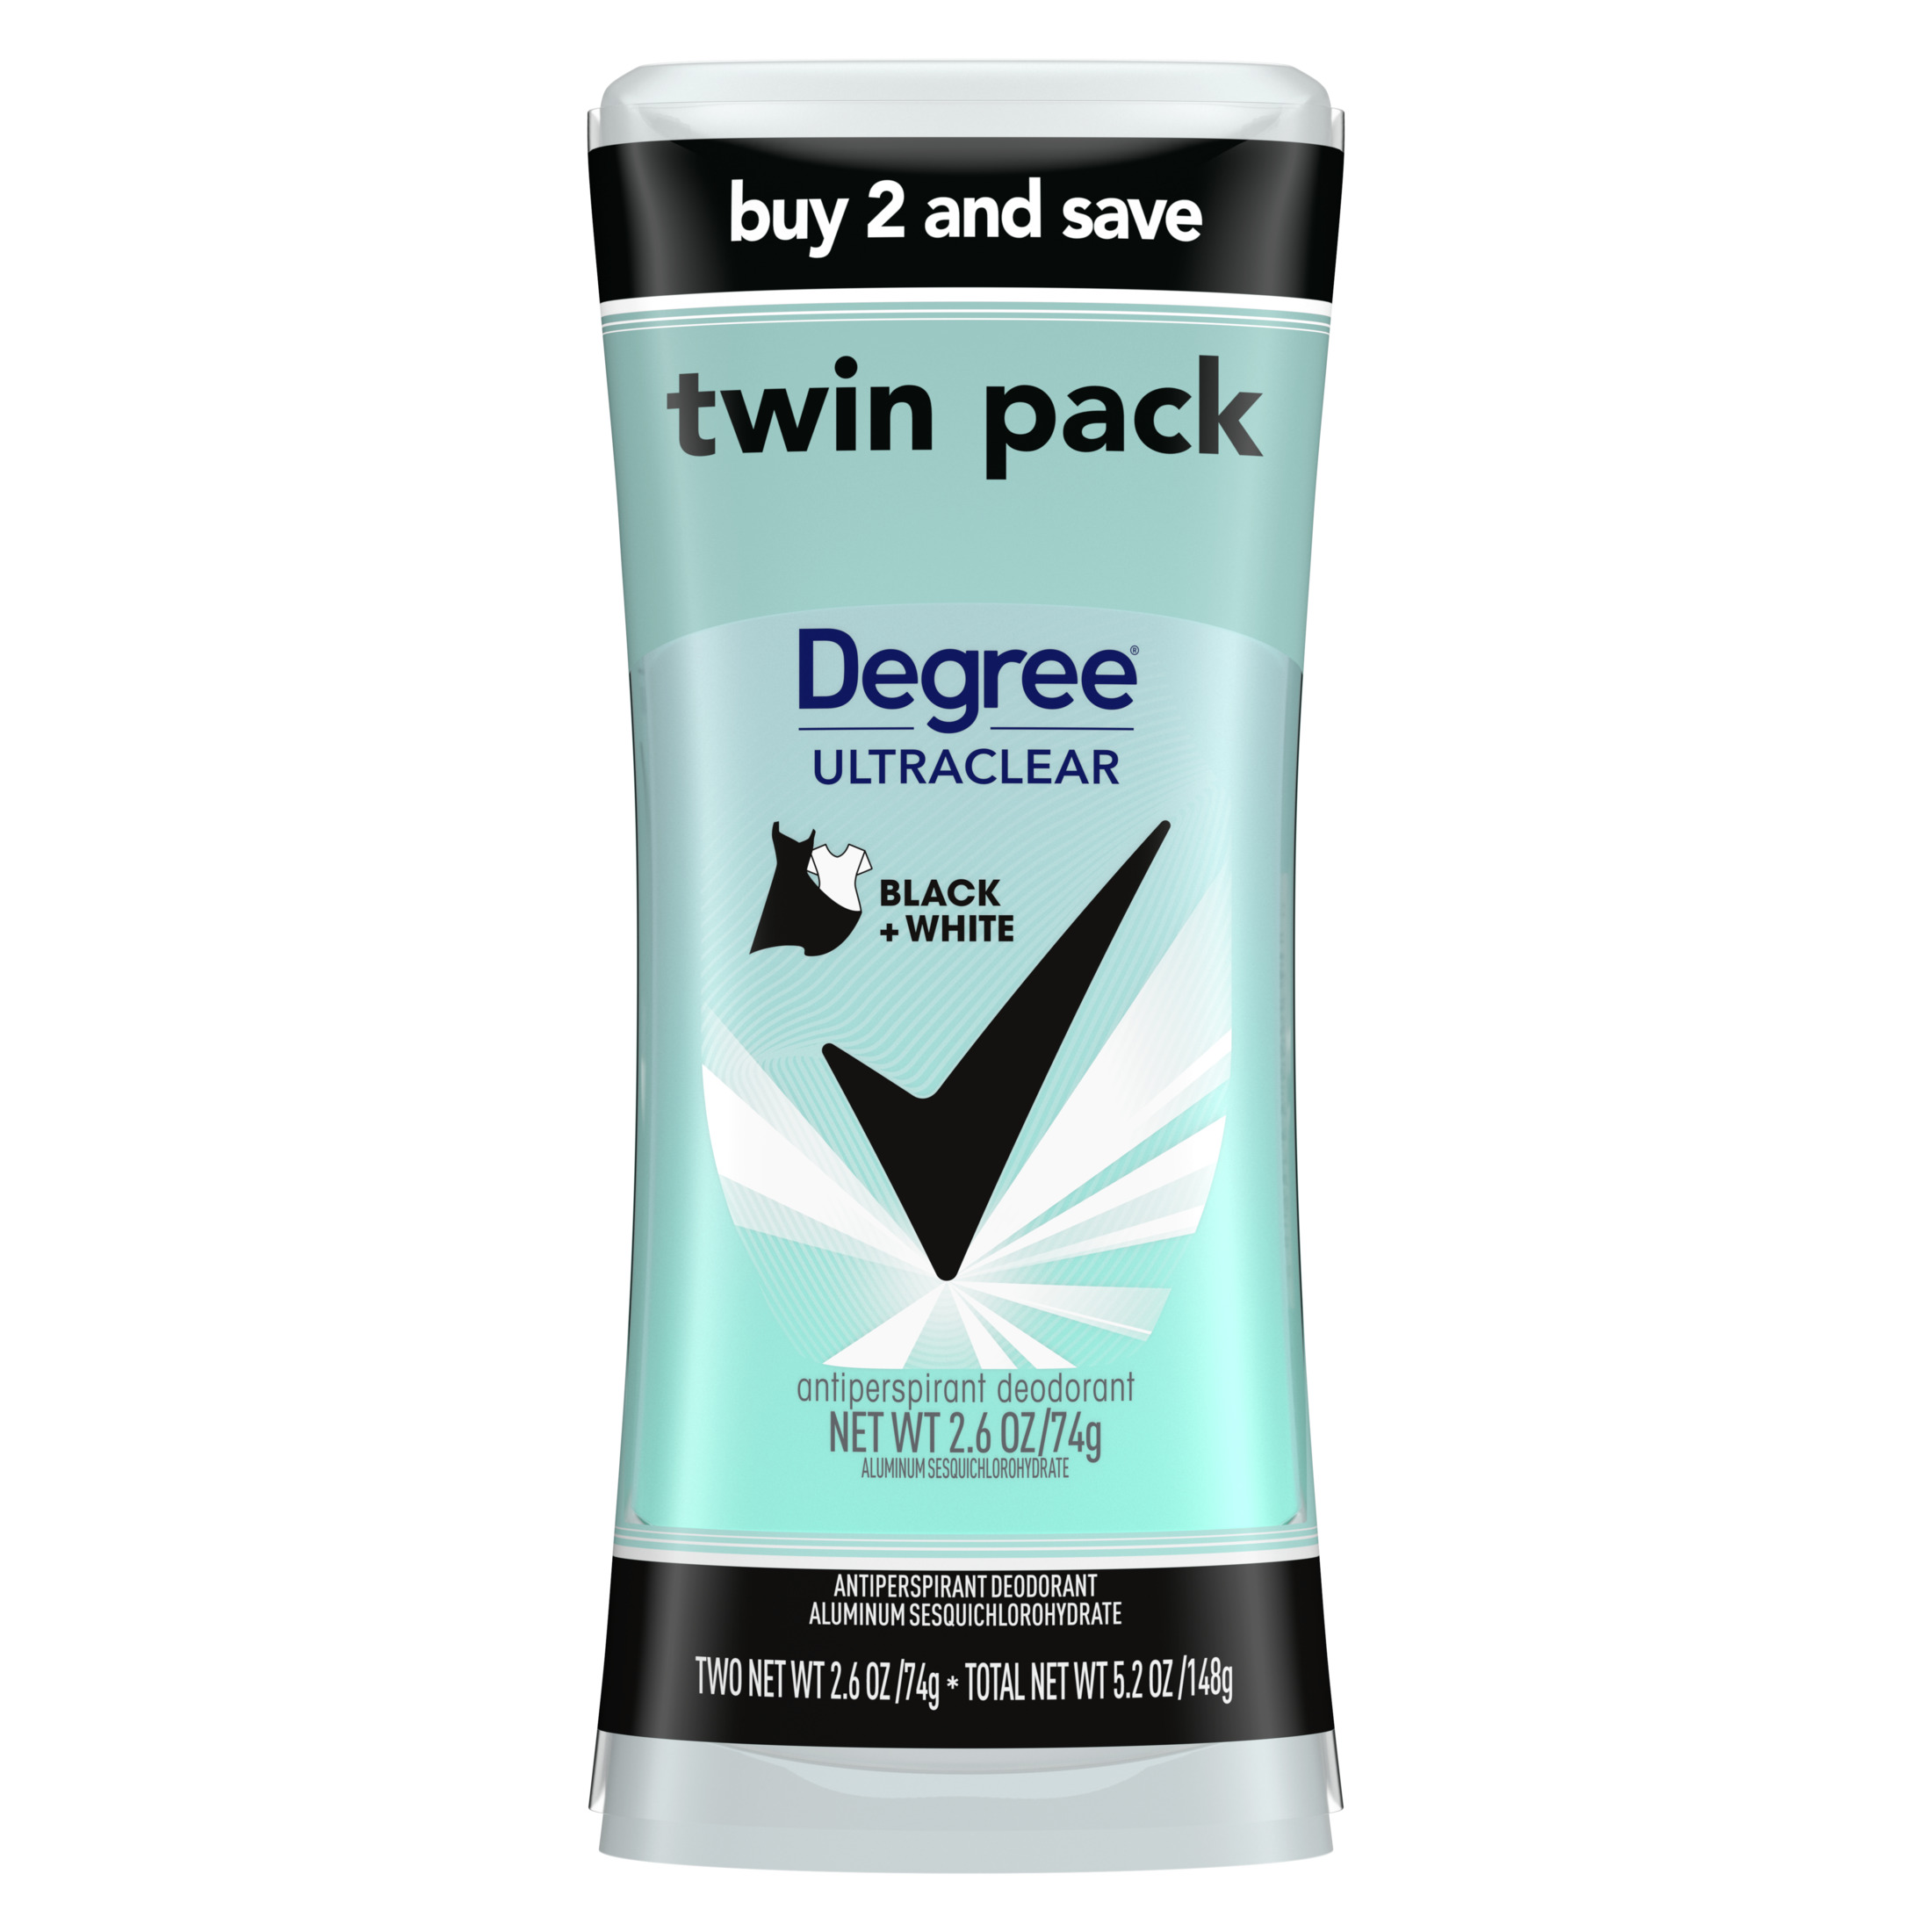 Degree Ultra Clear Long Lasting Women's Antiperspirant Deodorant Stick Twin Pack, Fresh, 2.6 oz - image 1 of 9